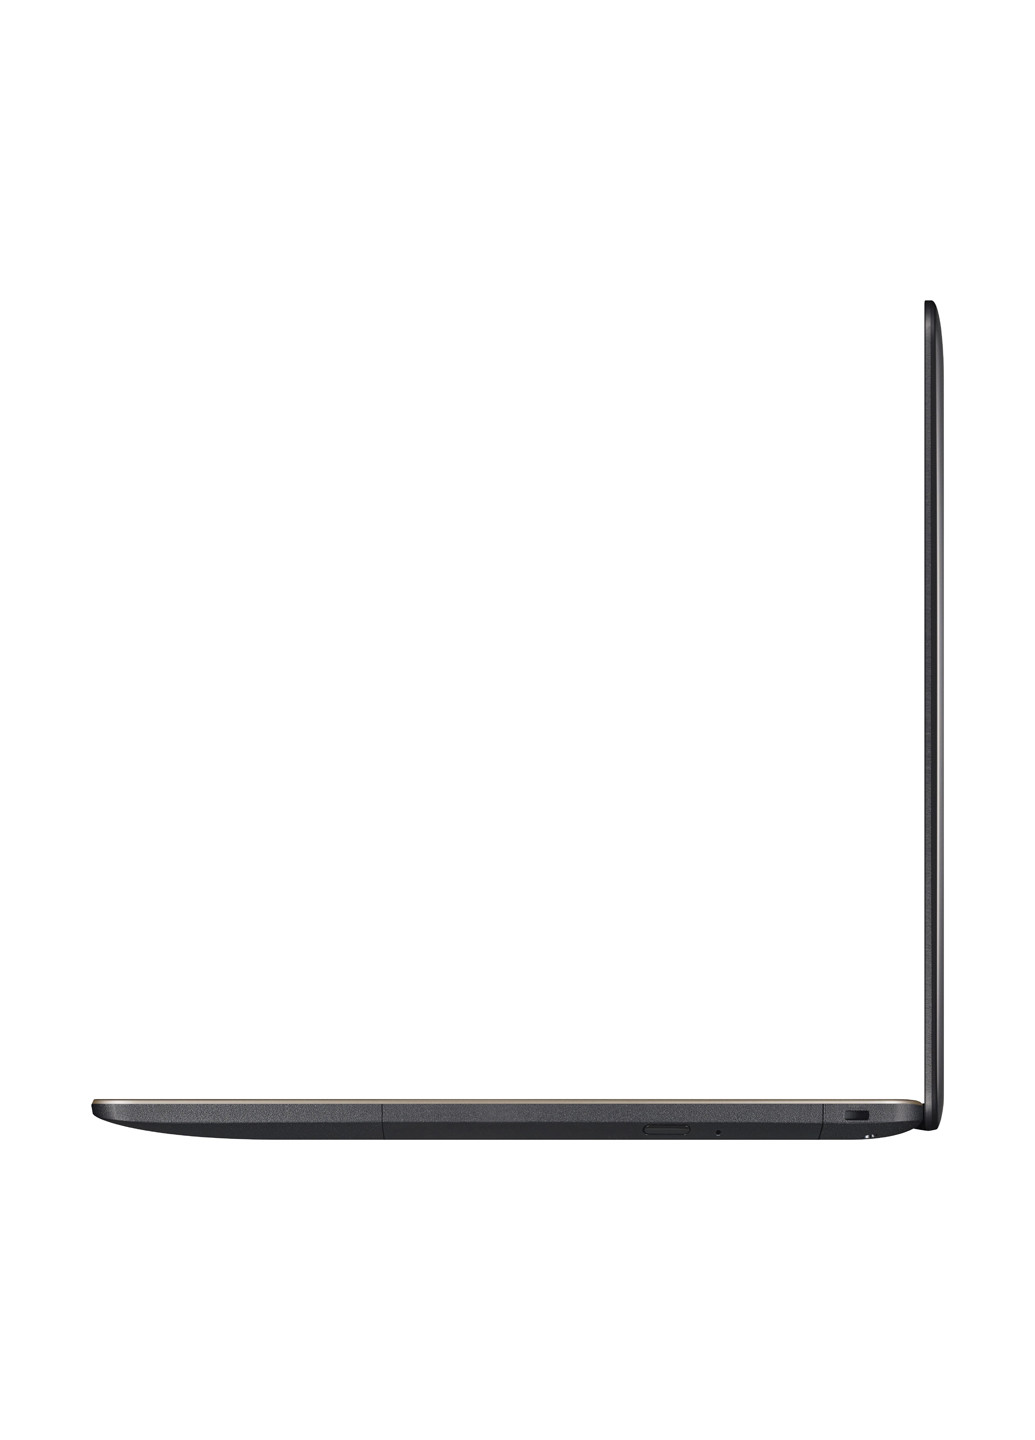 Ноутбук Asus vivobook 15 x540mb-dm104 (90nb0iq1-m01530) chocolate black (136402509)